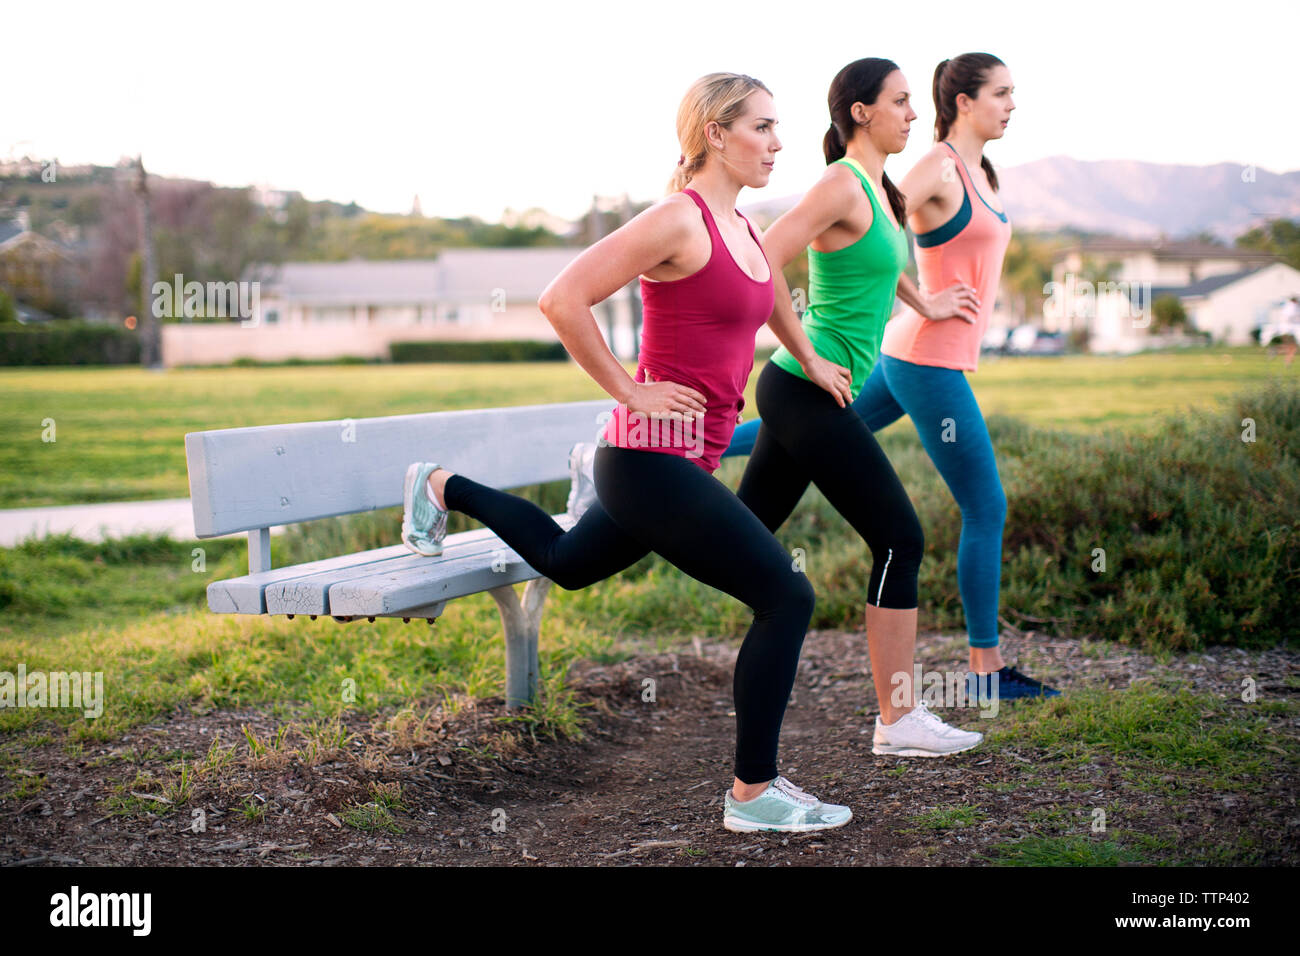 Women exercising on park bench on field Stock Photo